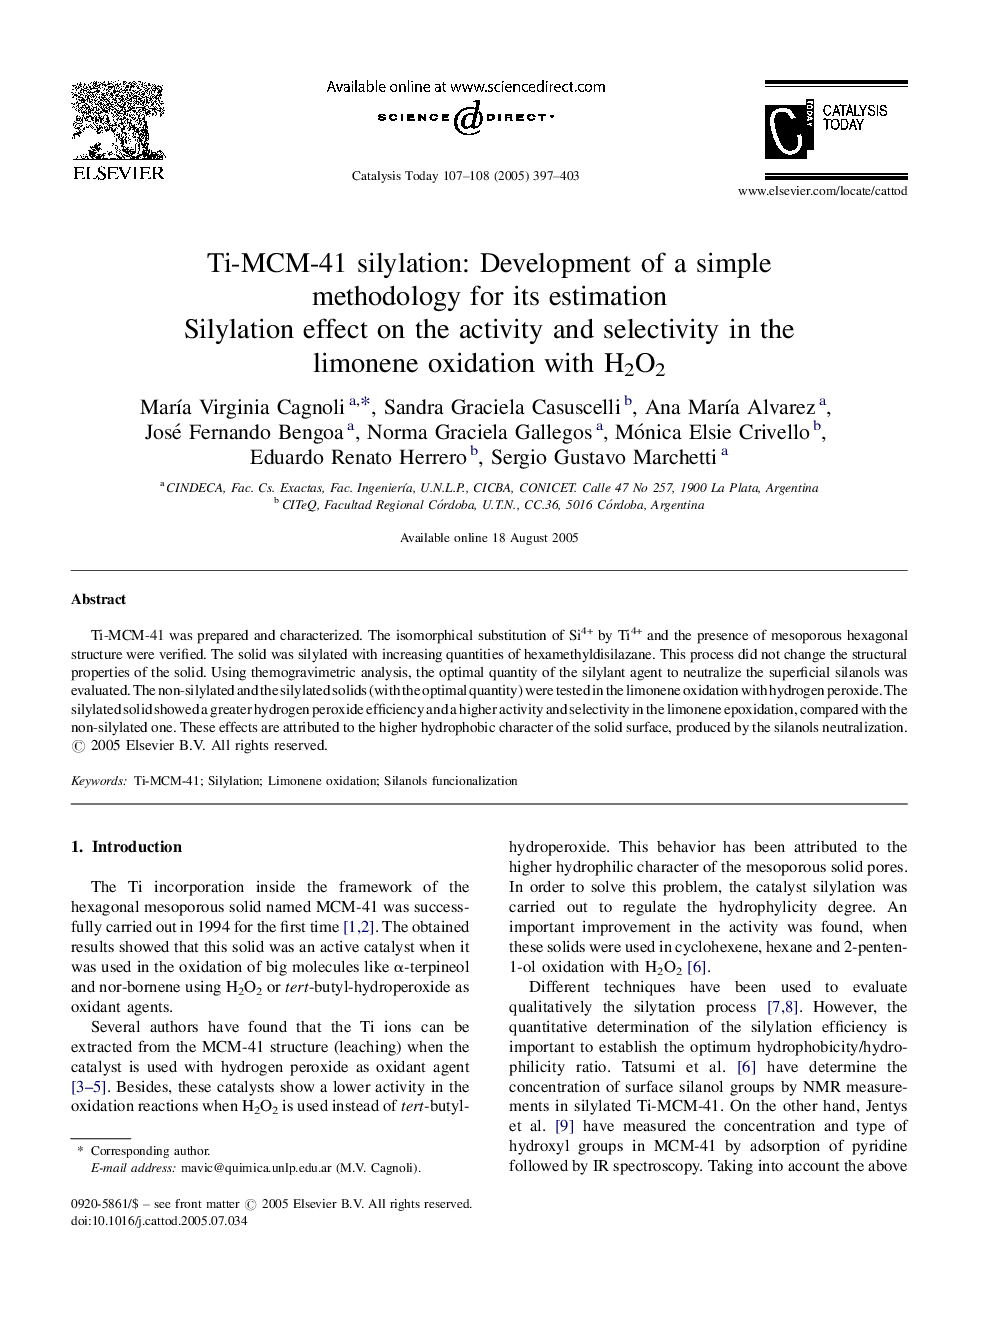 Ti-MCM-41 silylation: Development of a simple methodology for its estimation